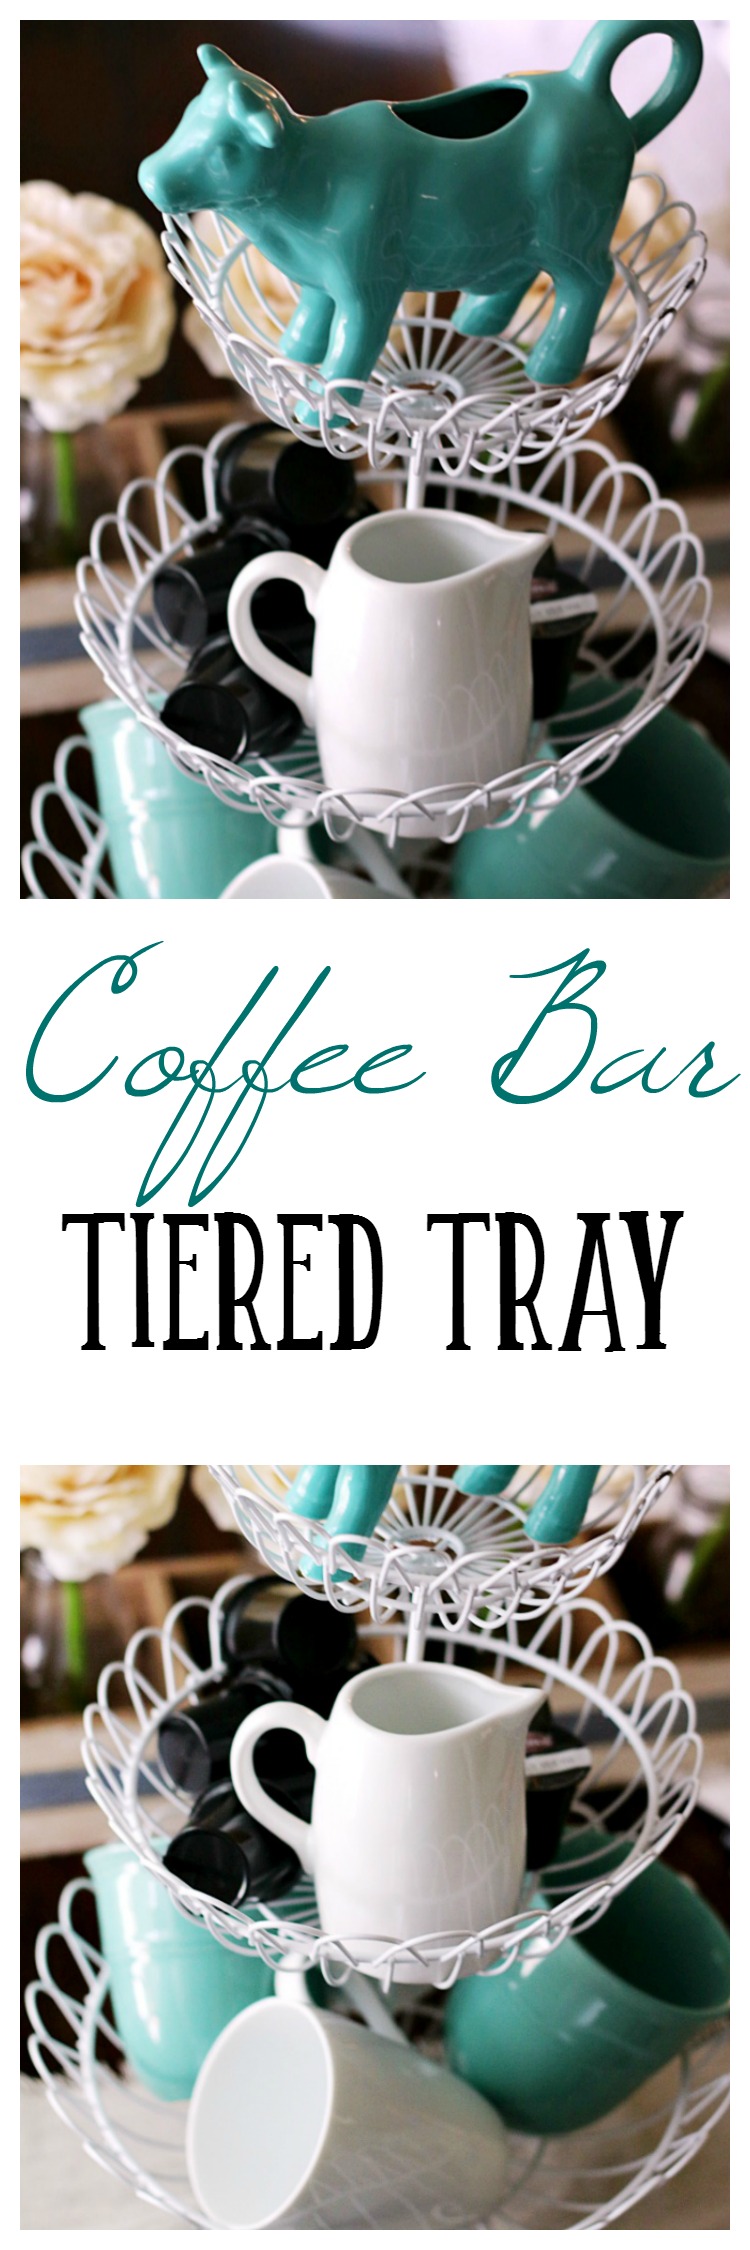 Coffee Bar Tiered Tray